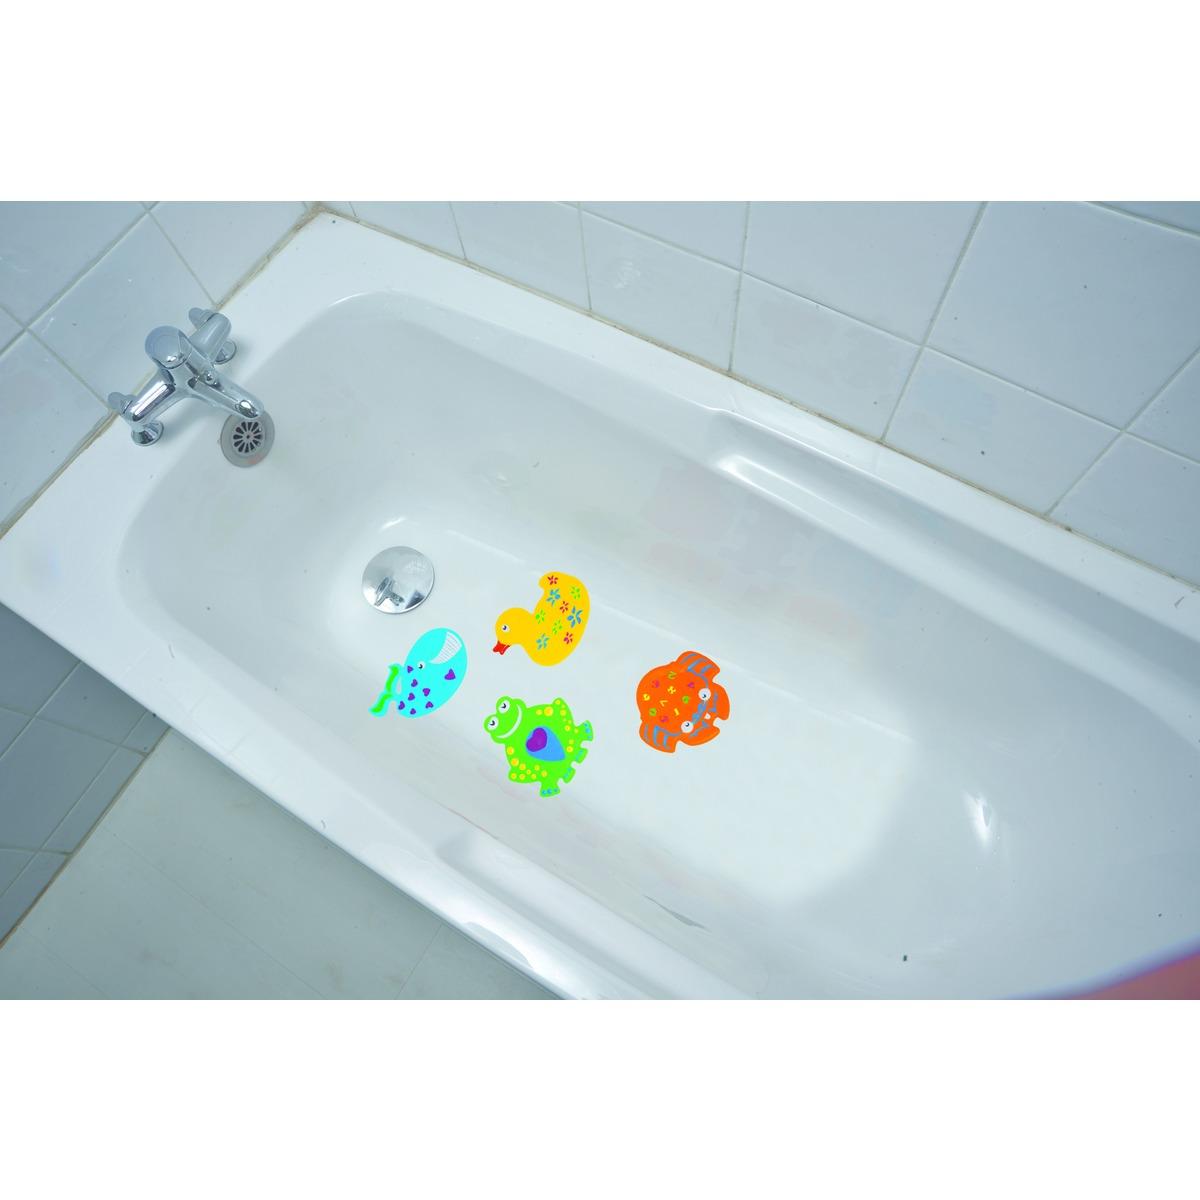 Ensemble de 4 animaux fond de baignoire anti-glisse - 11,5 x 12,5 cm - Multicolore